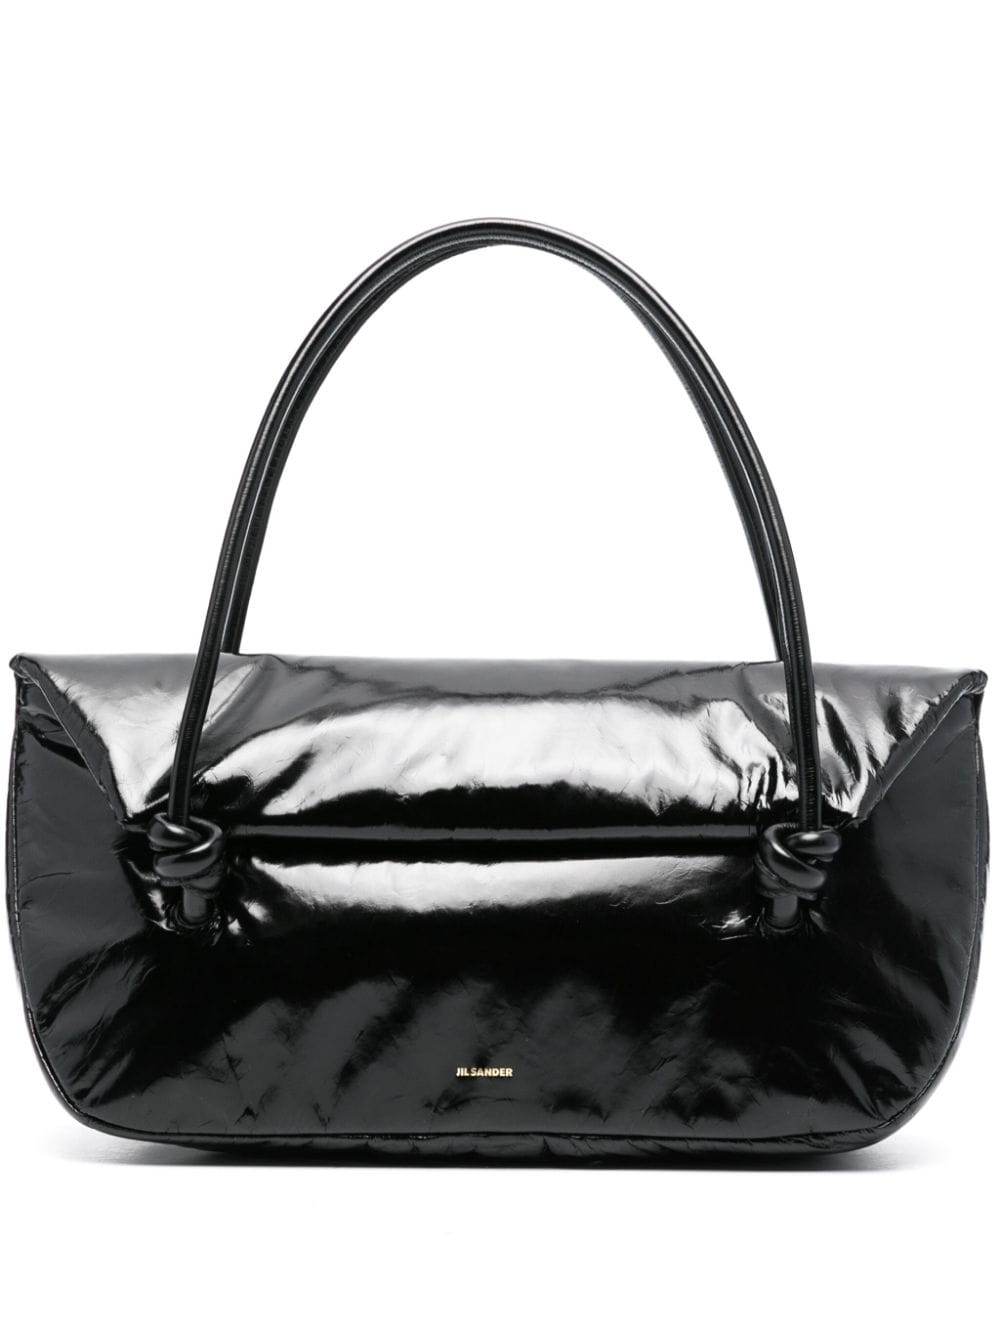 Jil Sander Patent Leather Tote Bag In Black